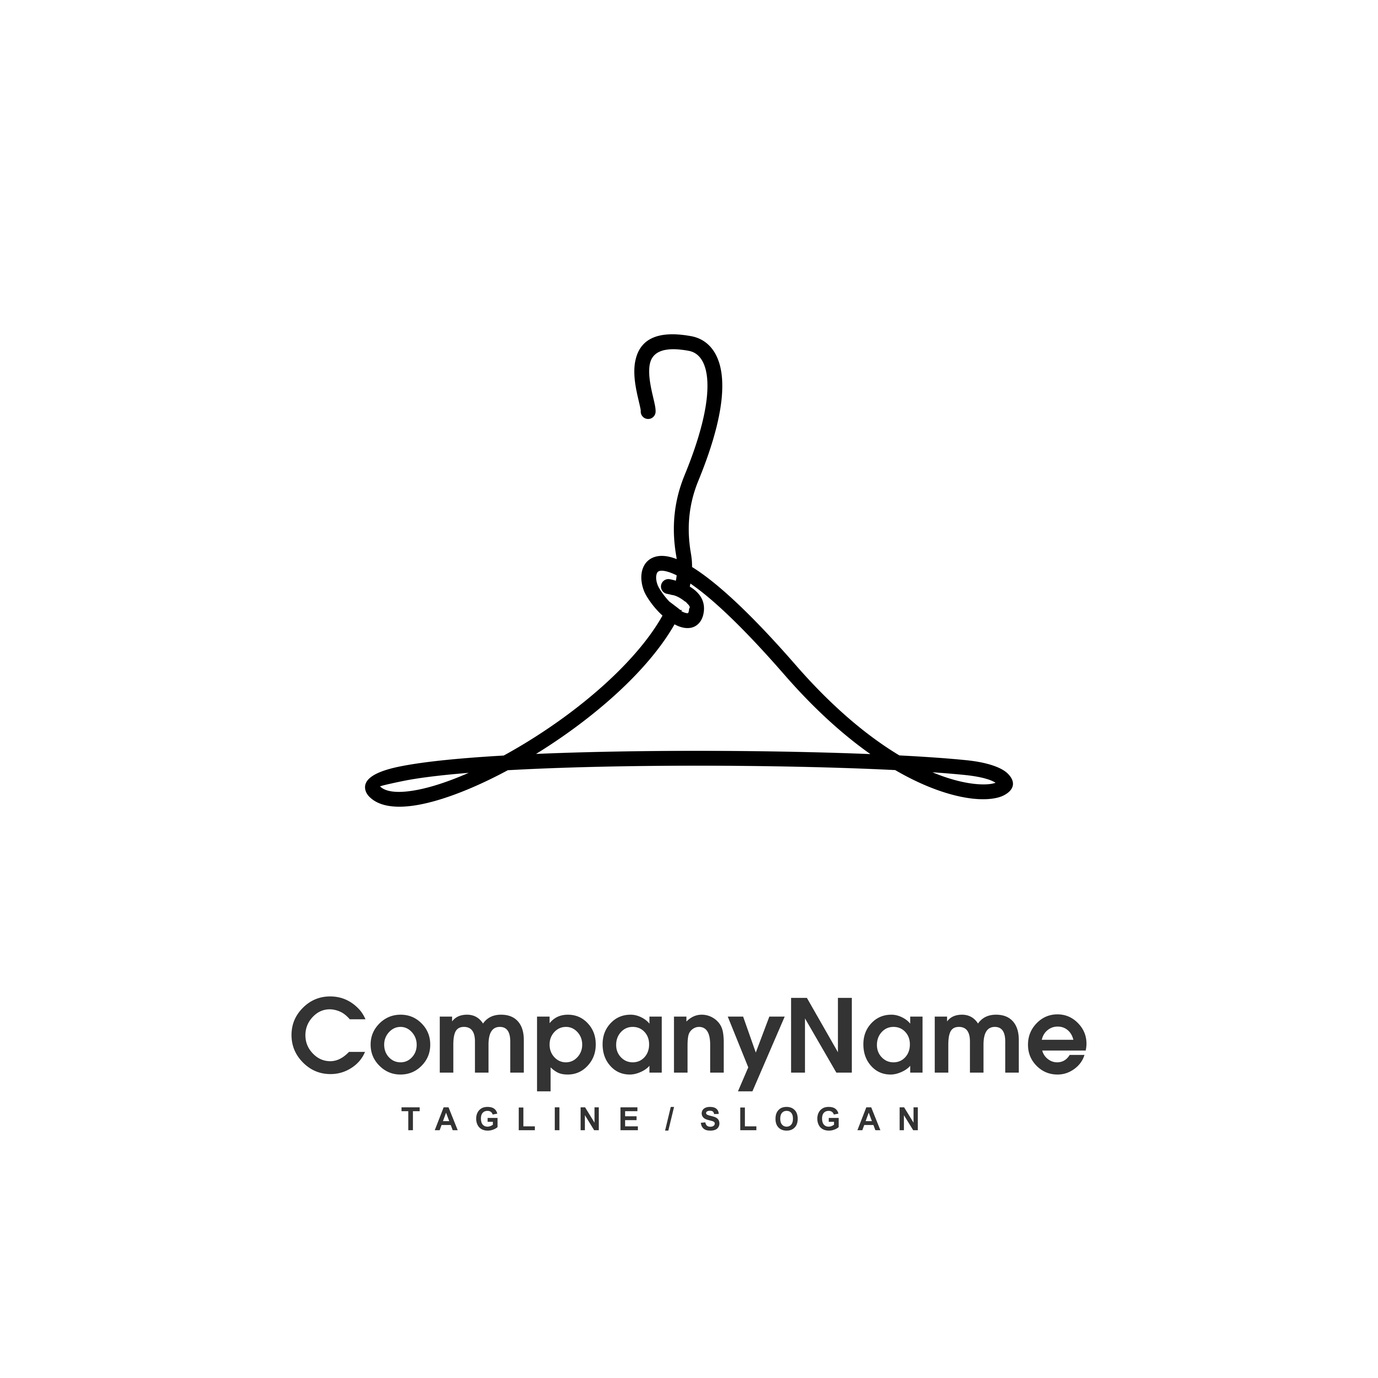 free clothing logo design maker